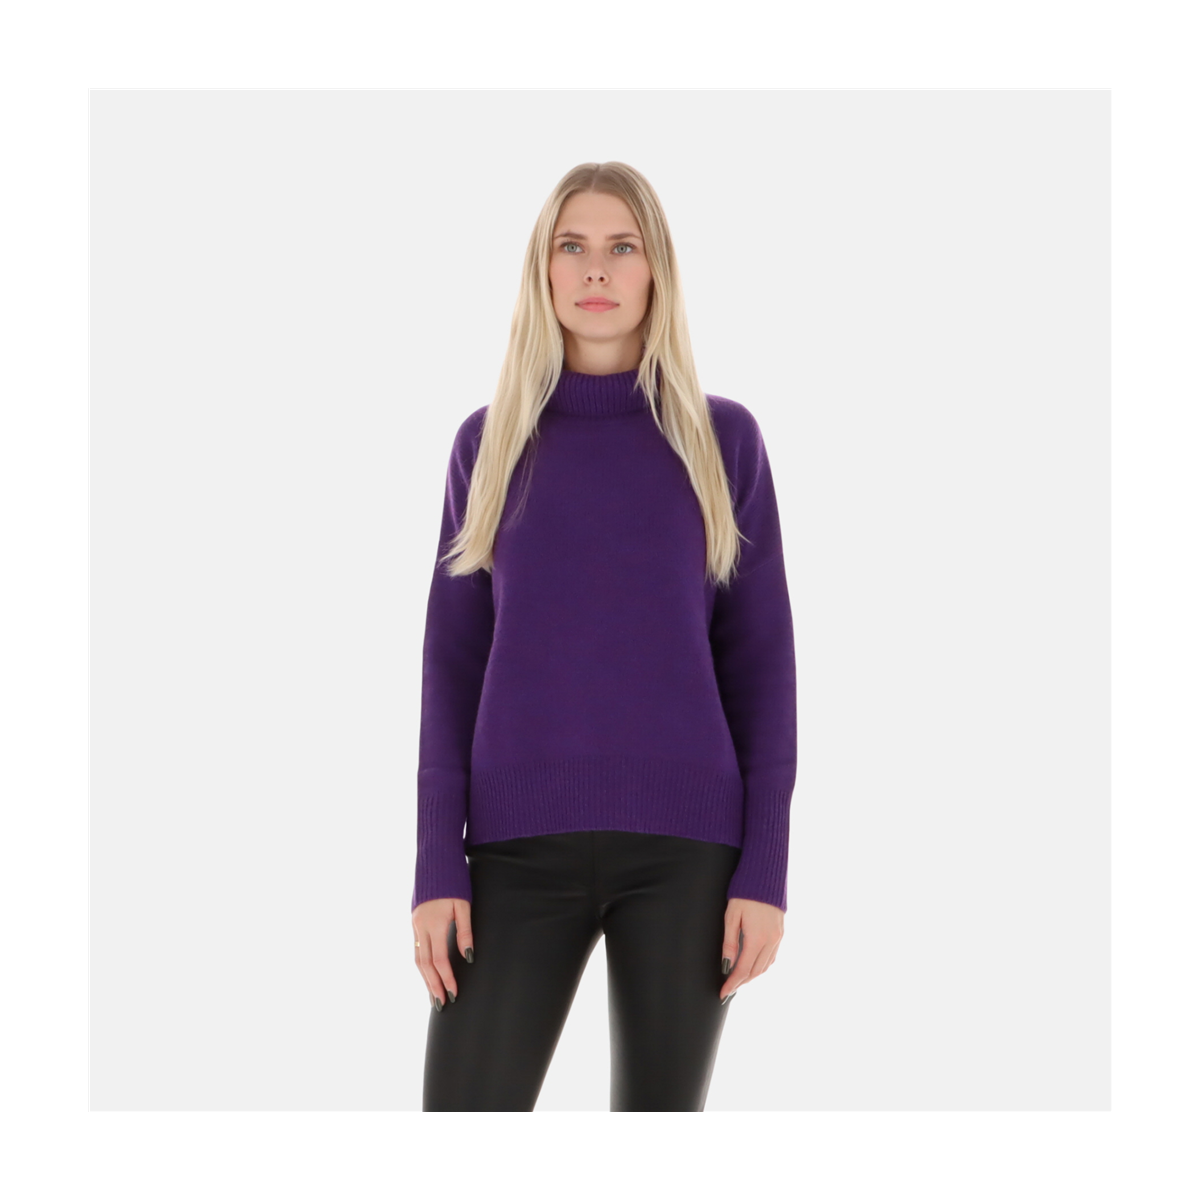 Lisa Yang Heidi Turtleneck Sweater